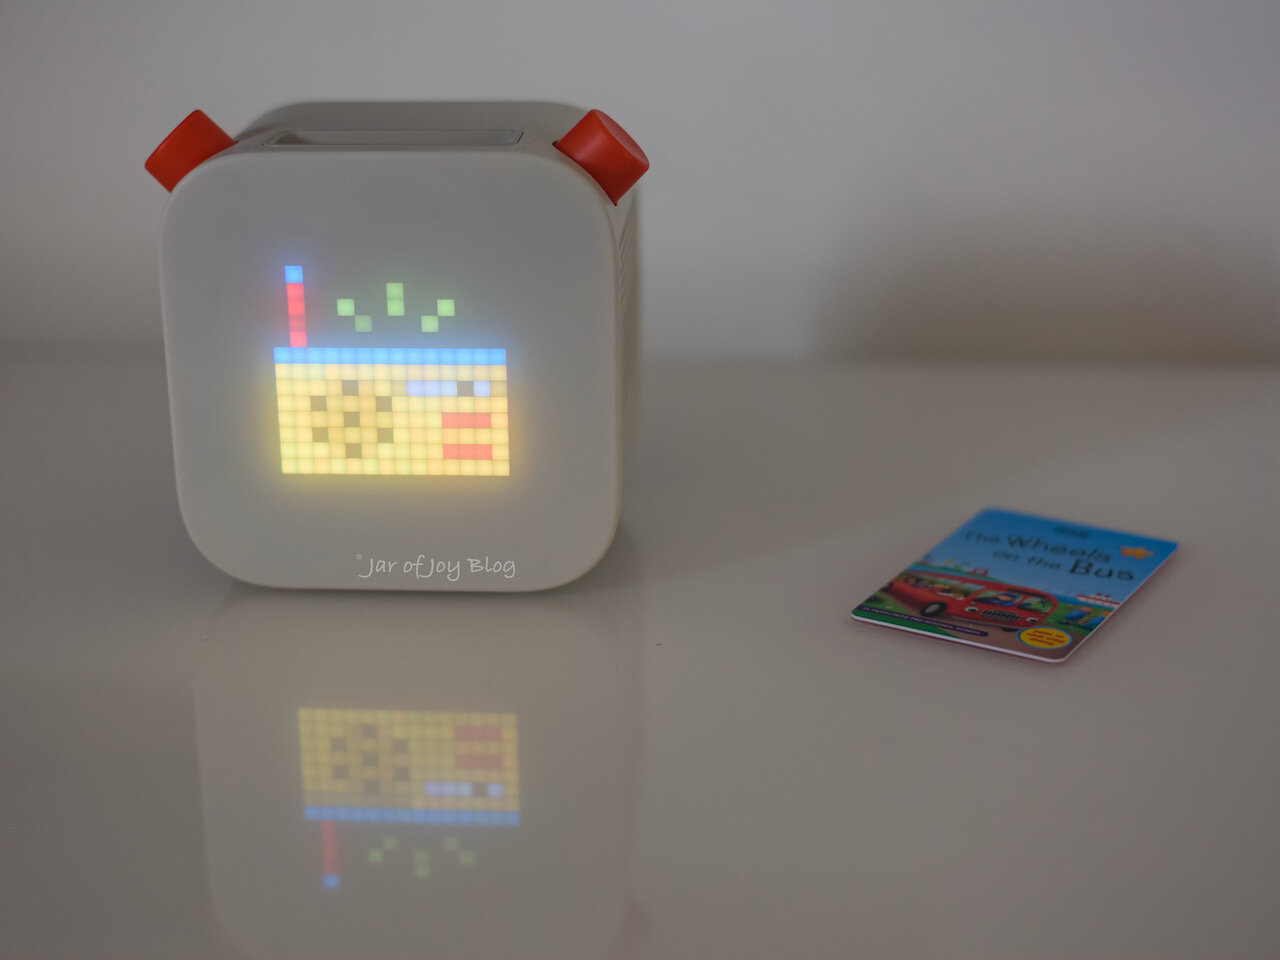 Every Child Needs Yoto Player (Review) — Jar of Joy Blog